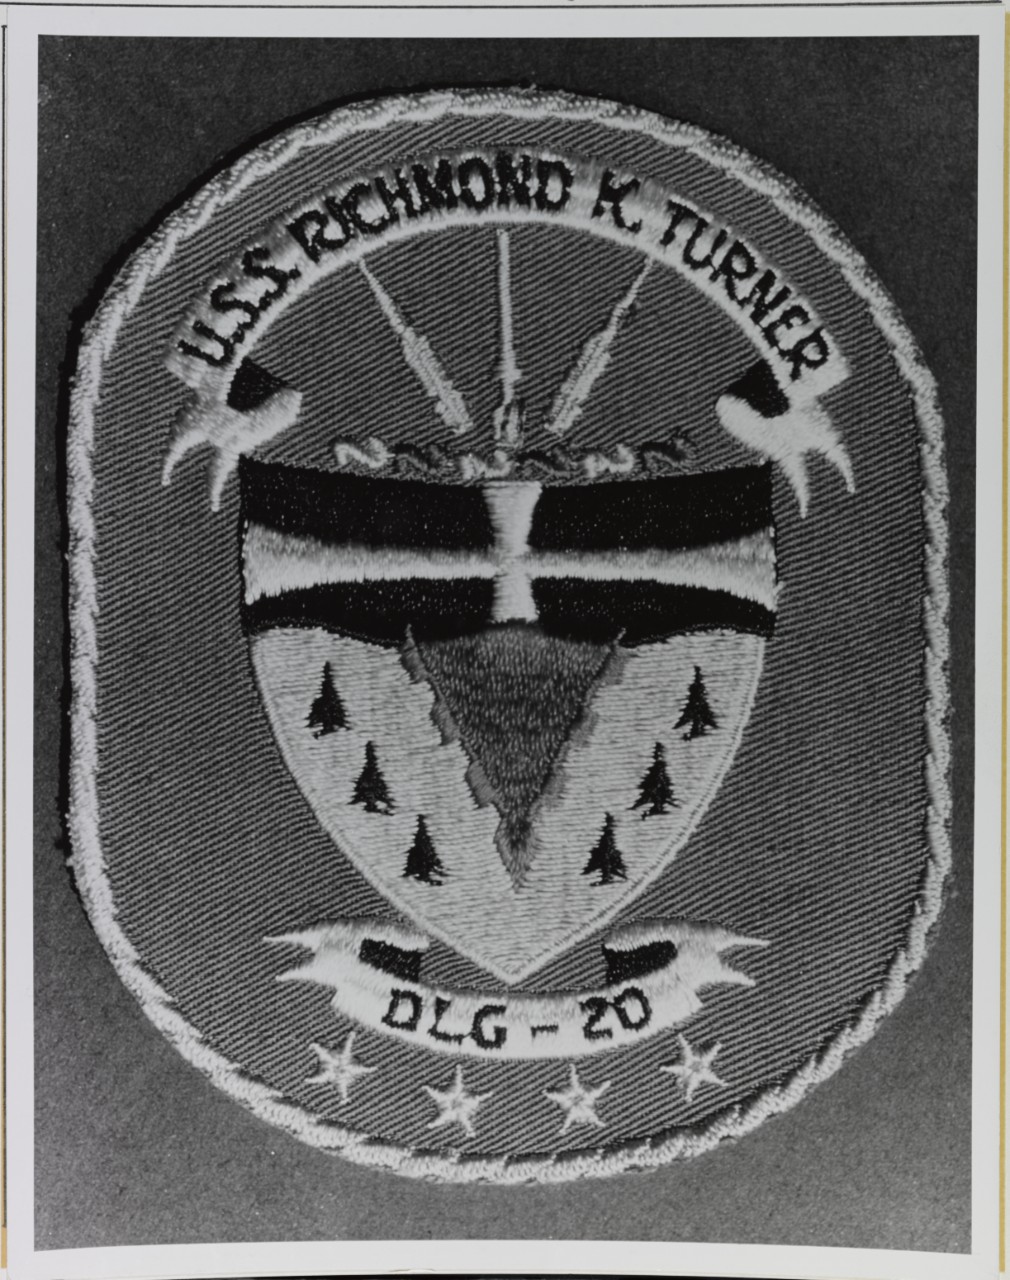 Insignia:  USS RICHMOND K. TURNER (DLG-20)